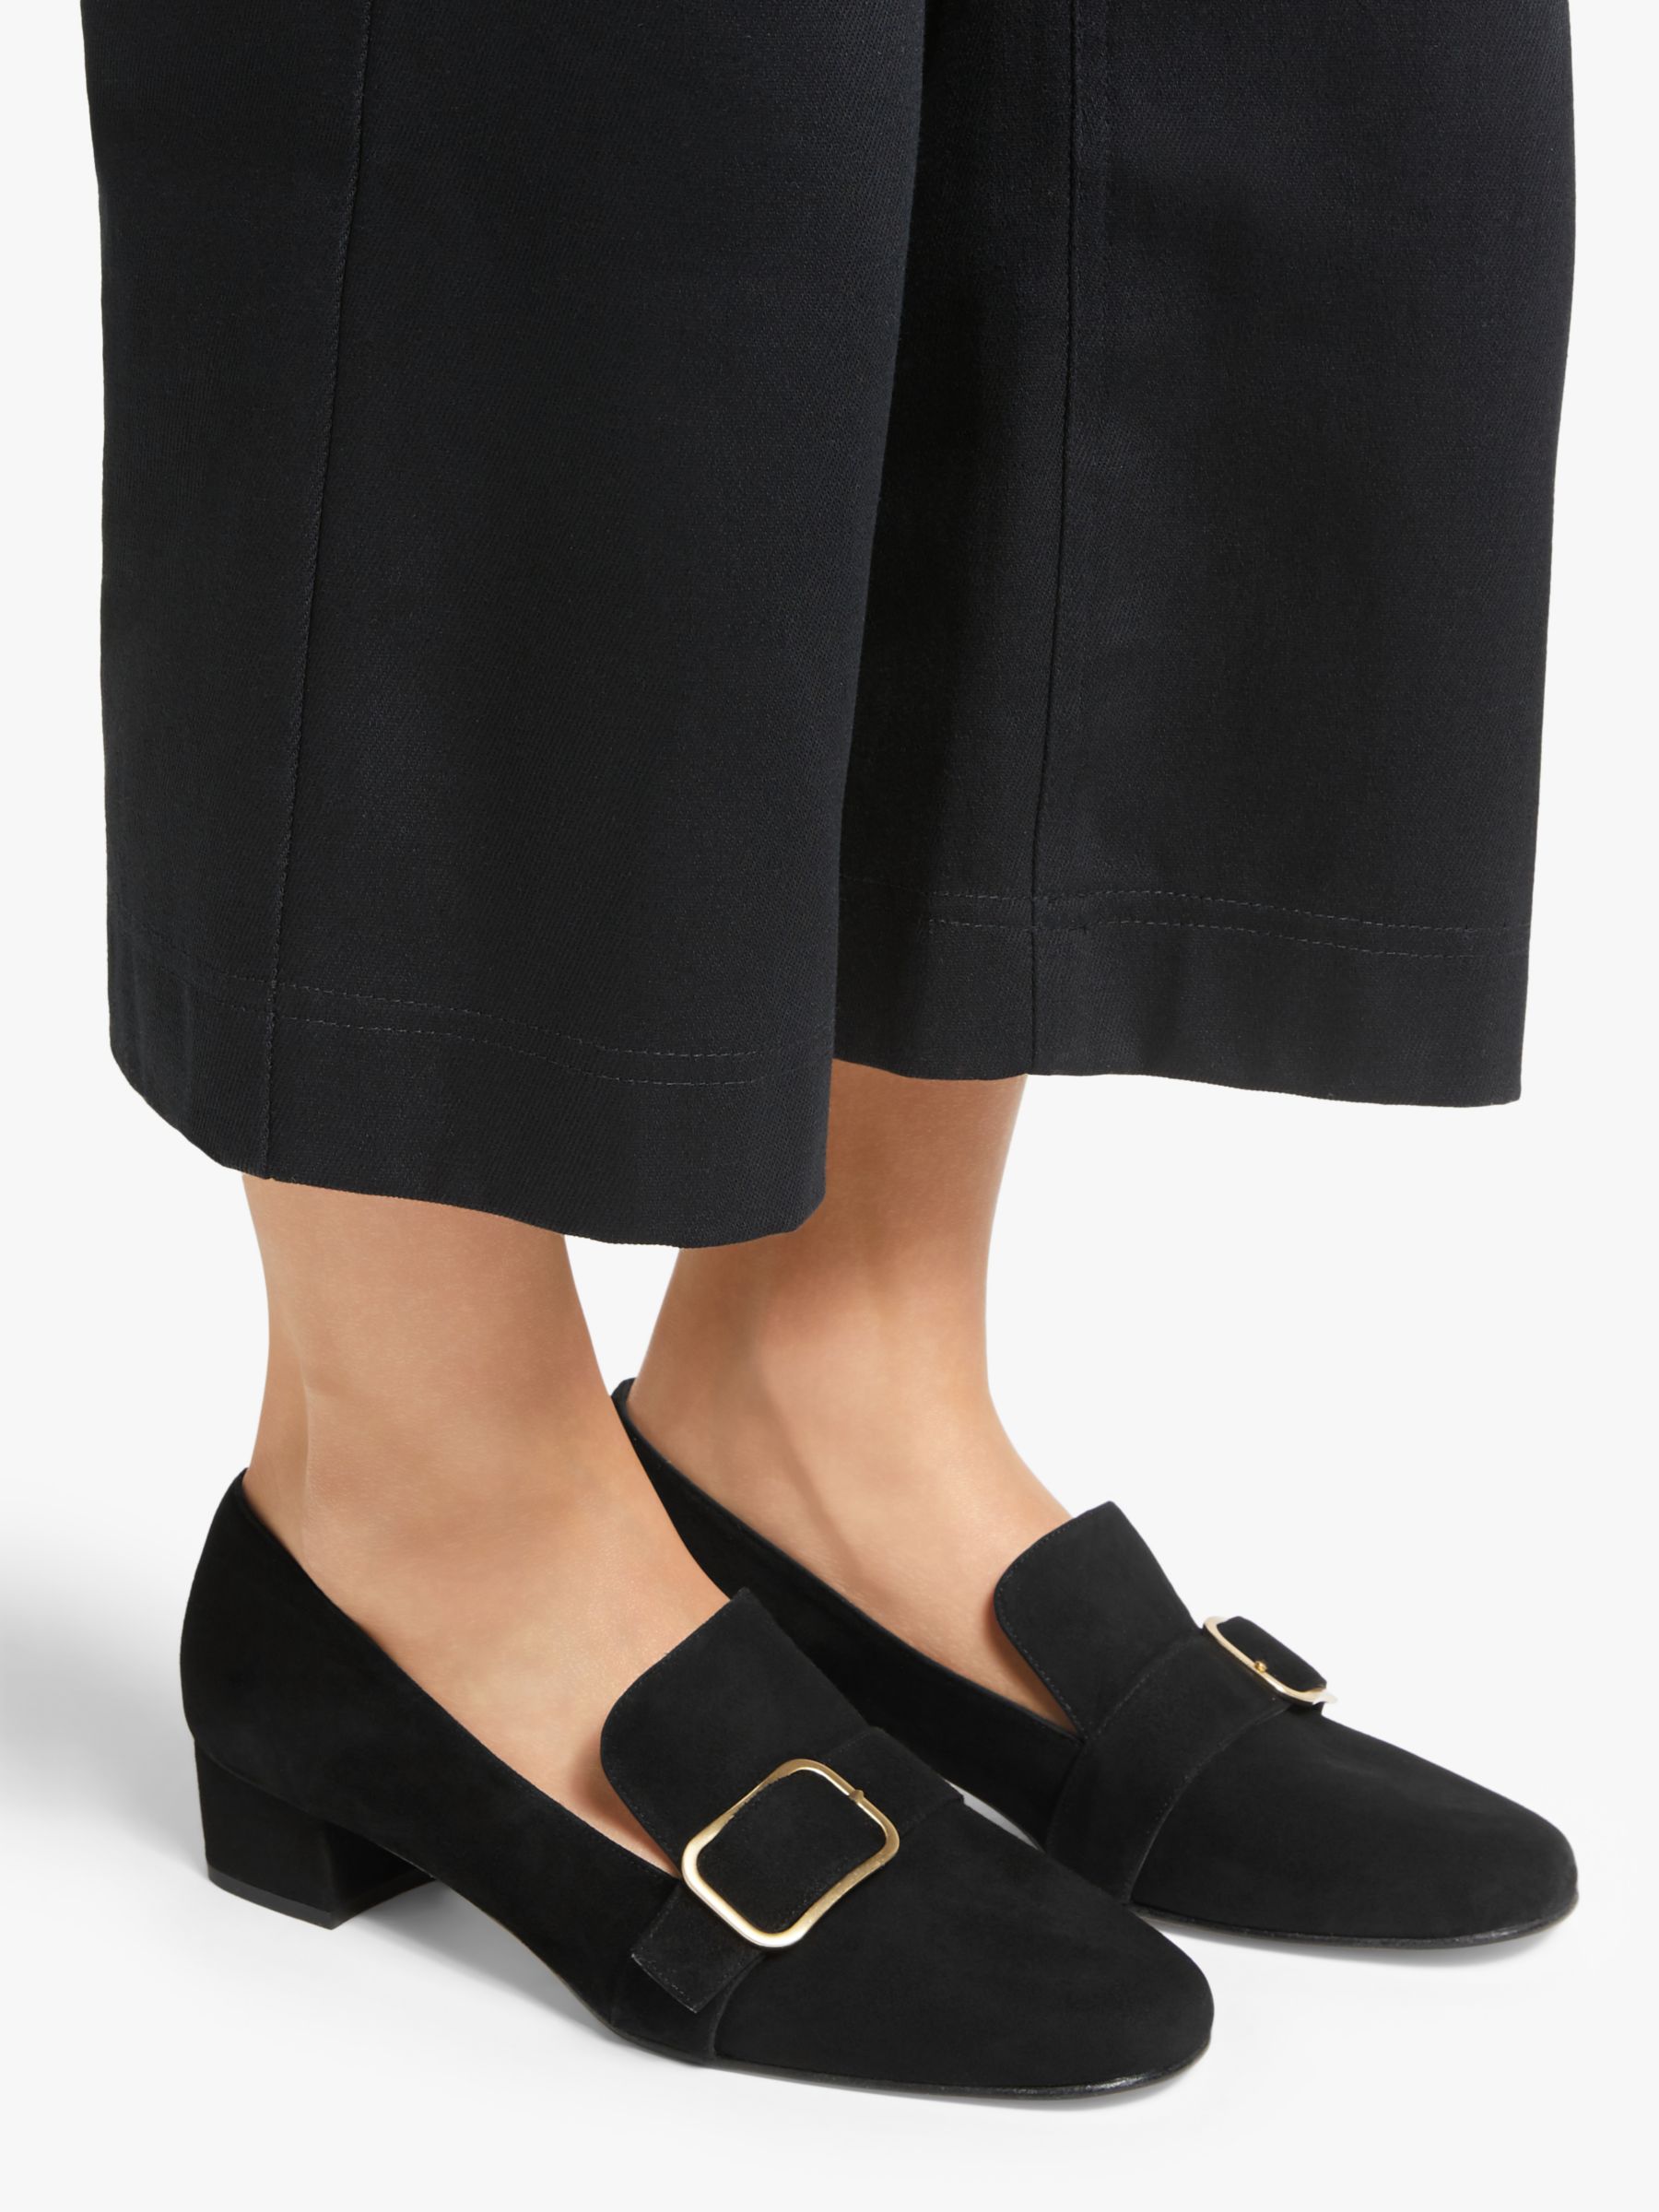 John Lewis & Partners Amelie Suede Low Heel Court Shoes, Black